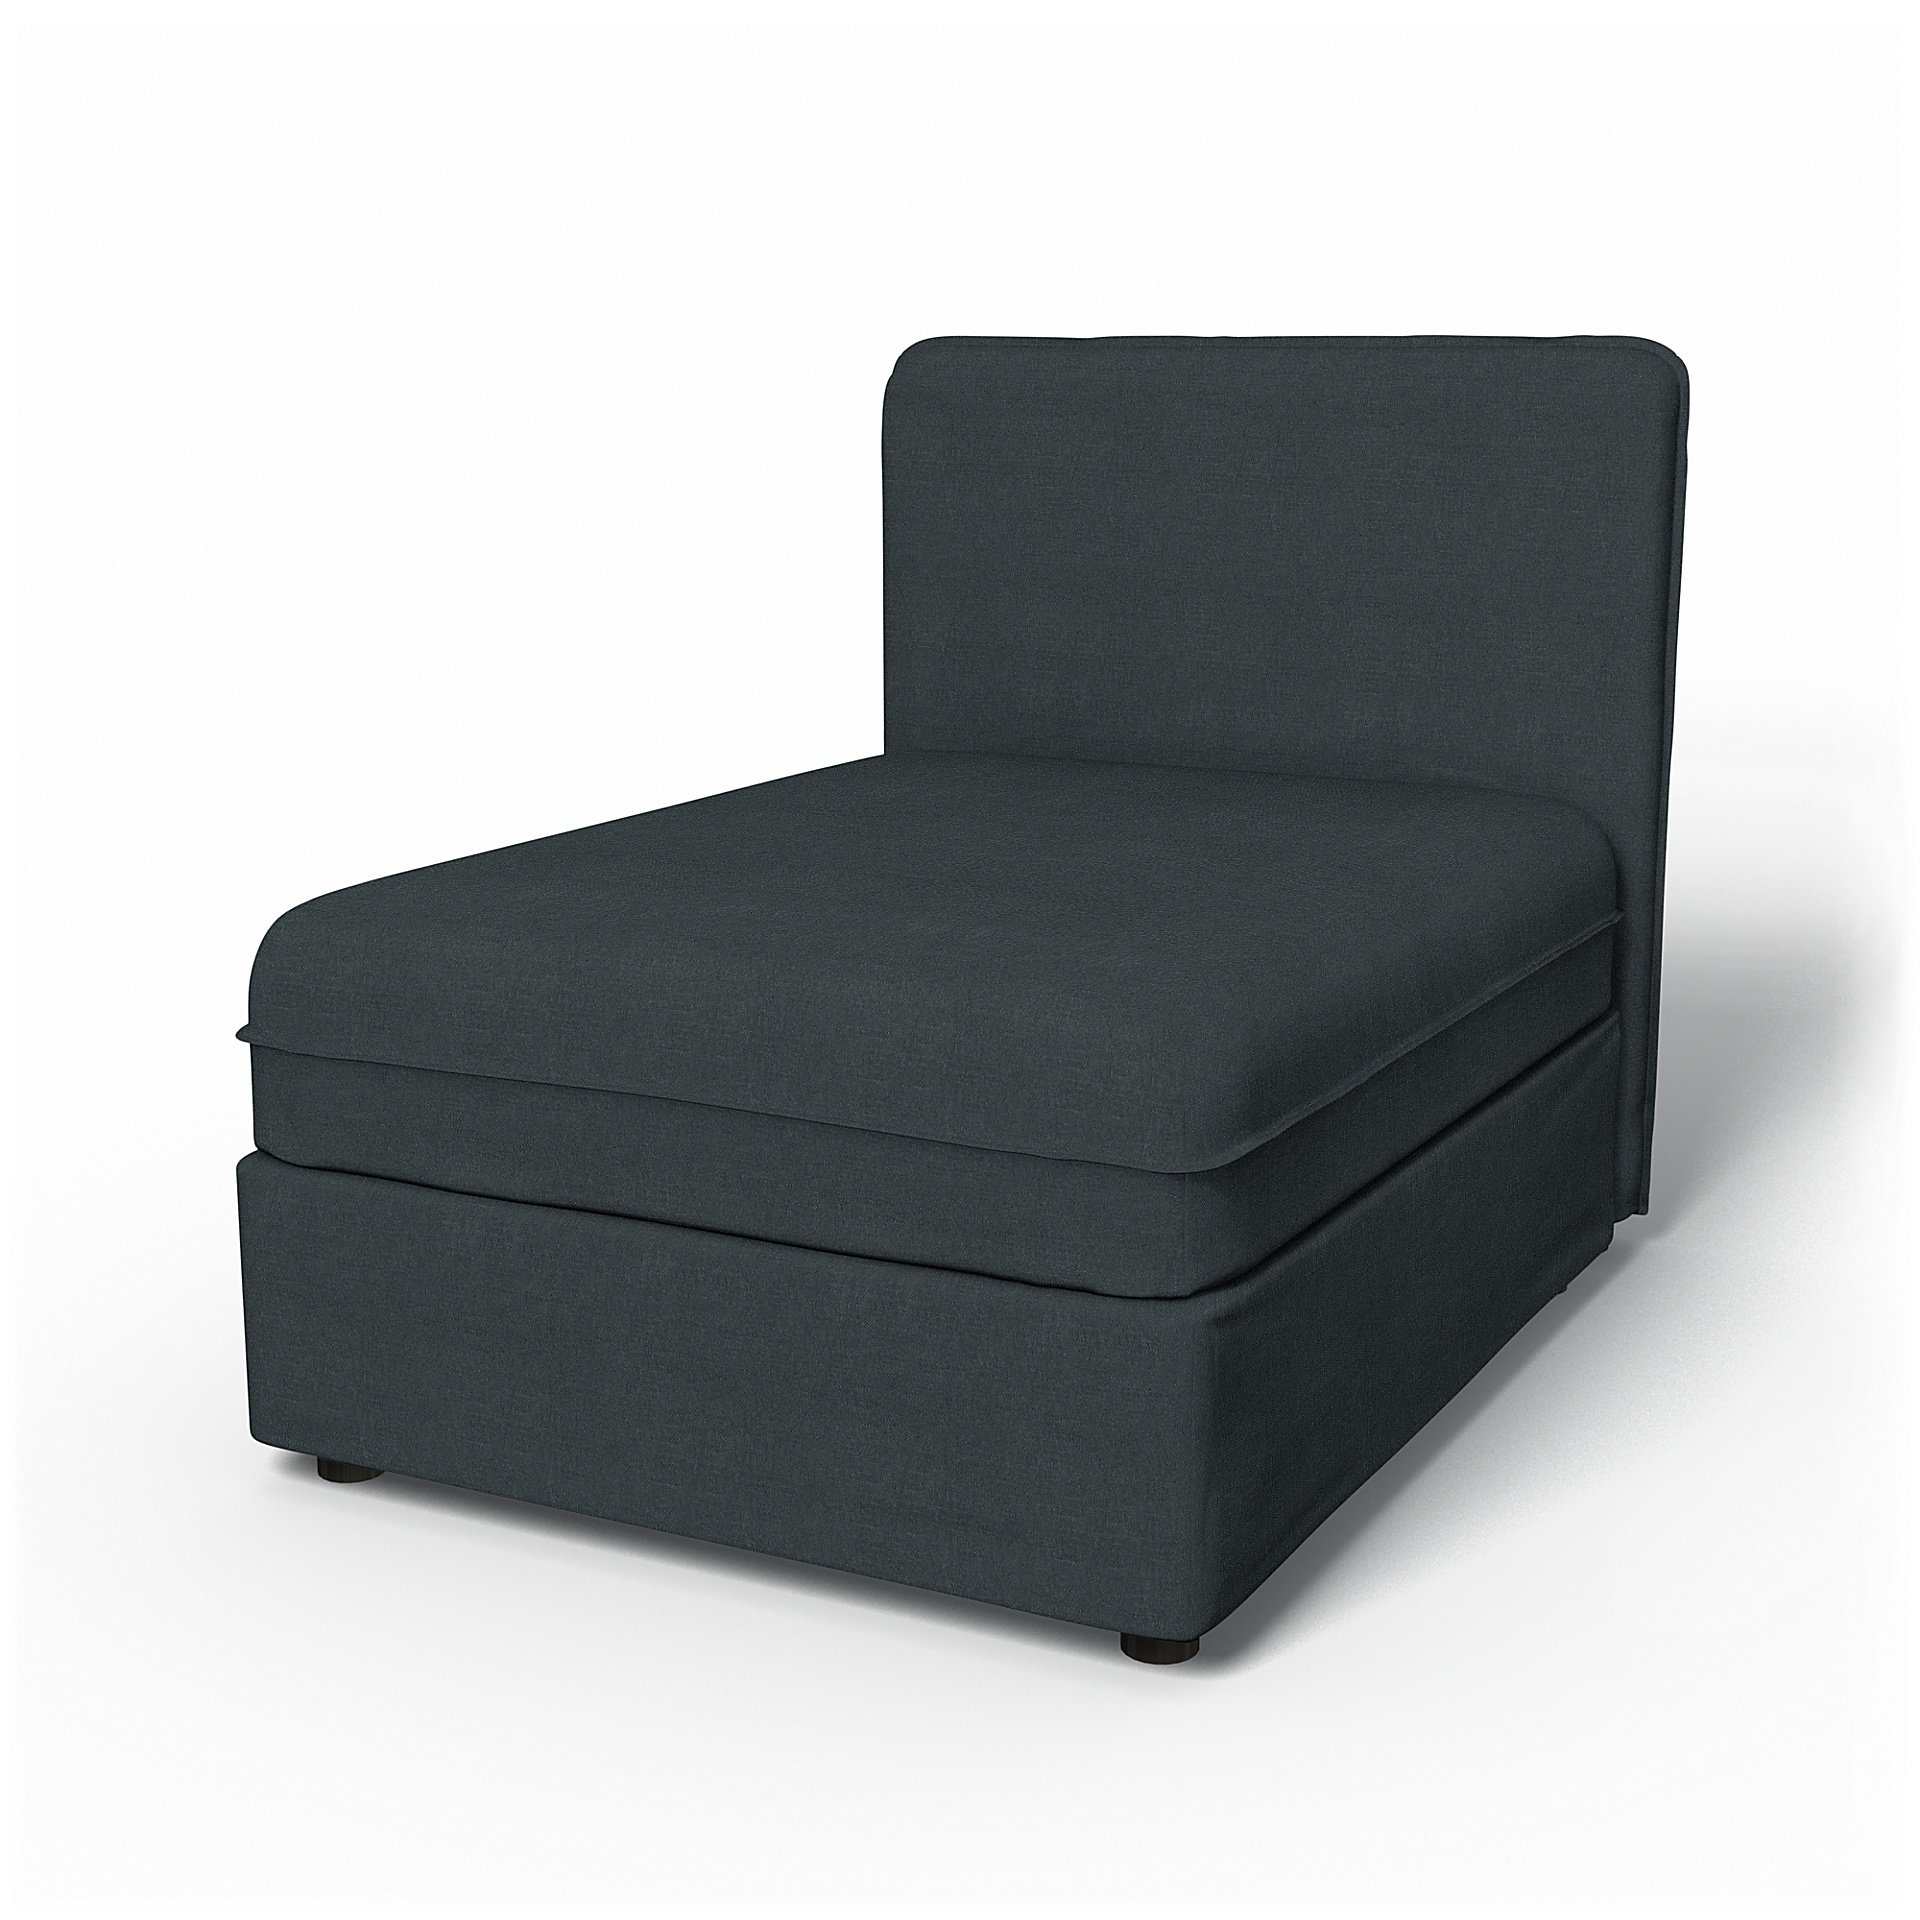 IKEA - Vallentuna Seat Module with Low Back Cover 80x100cm 32x39in, Graphite Grey, Linen - Bemz